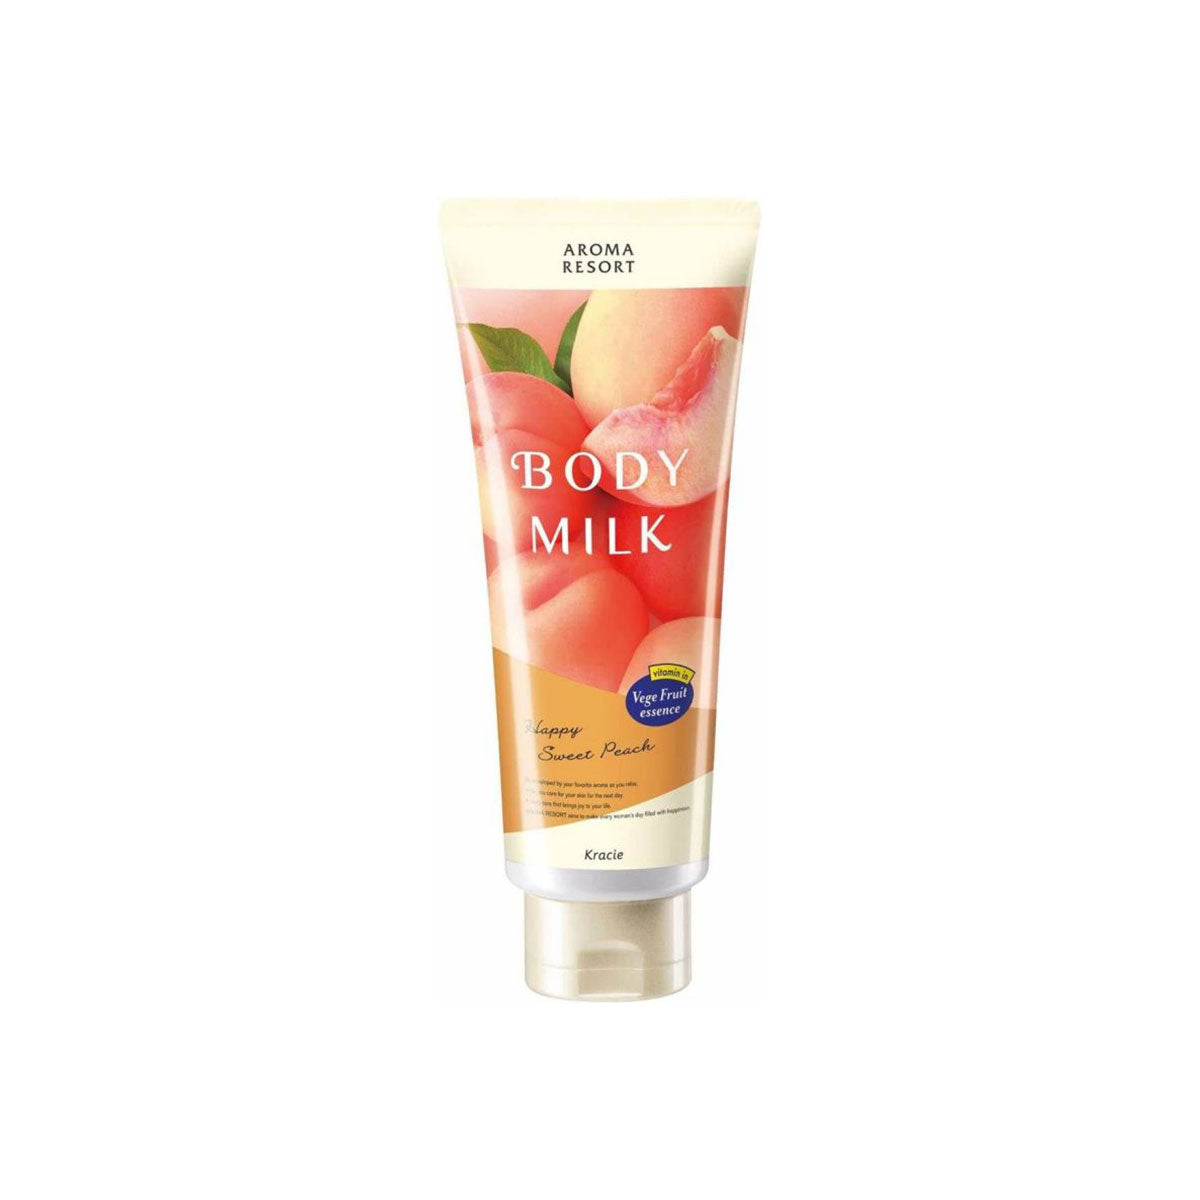 Aroma Resort Body Milk Happy Sweet Peach 200g